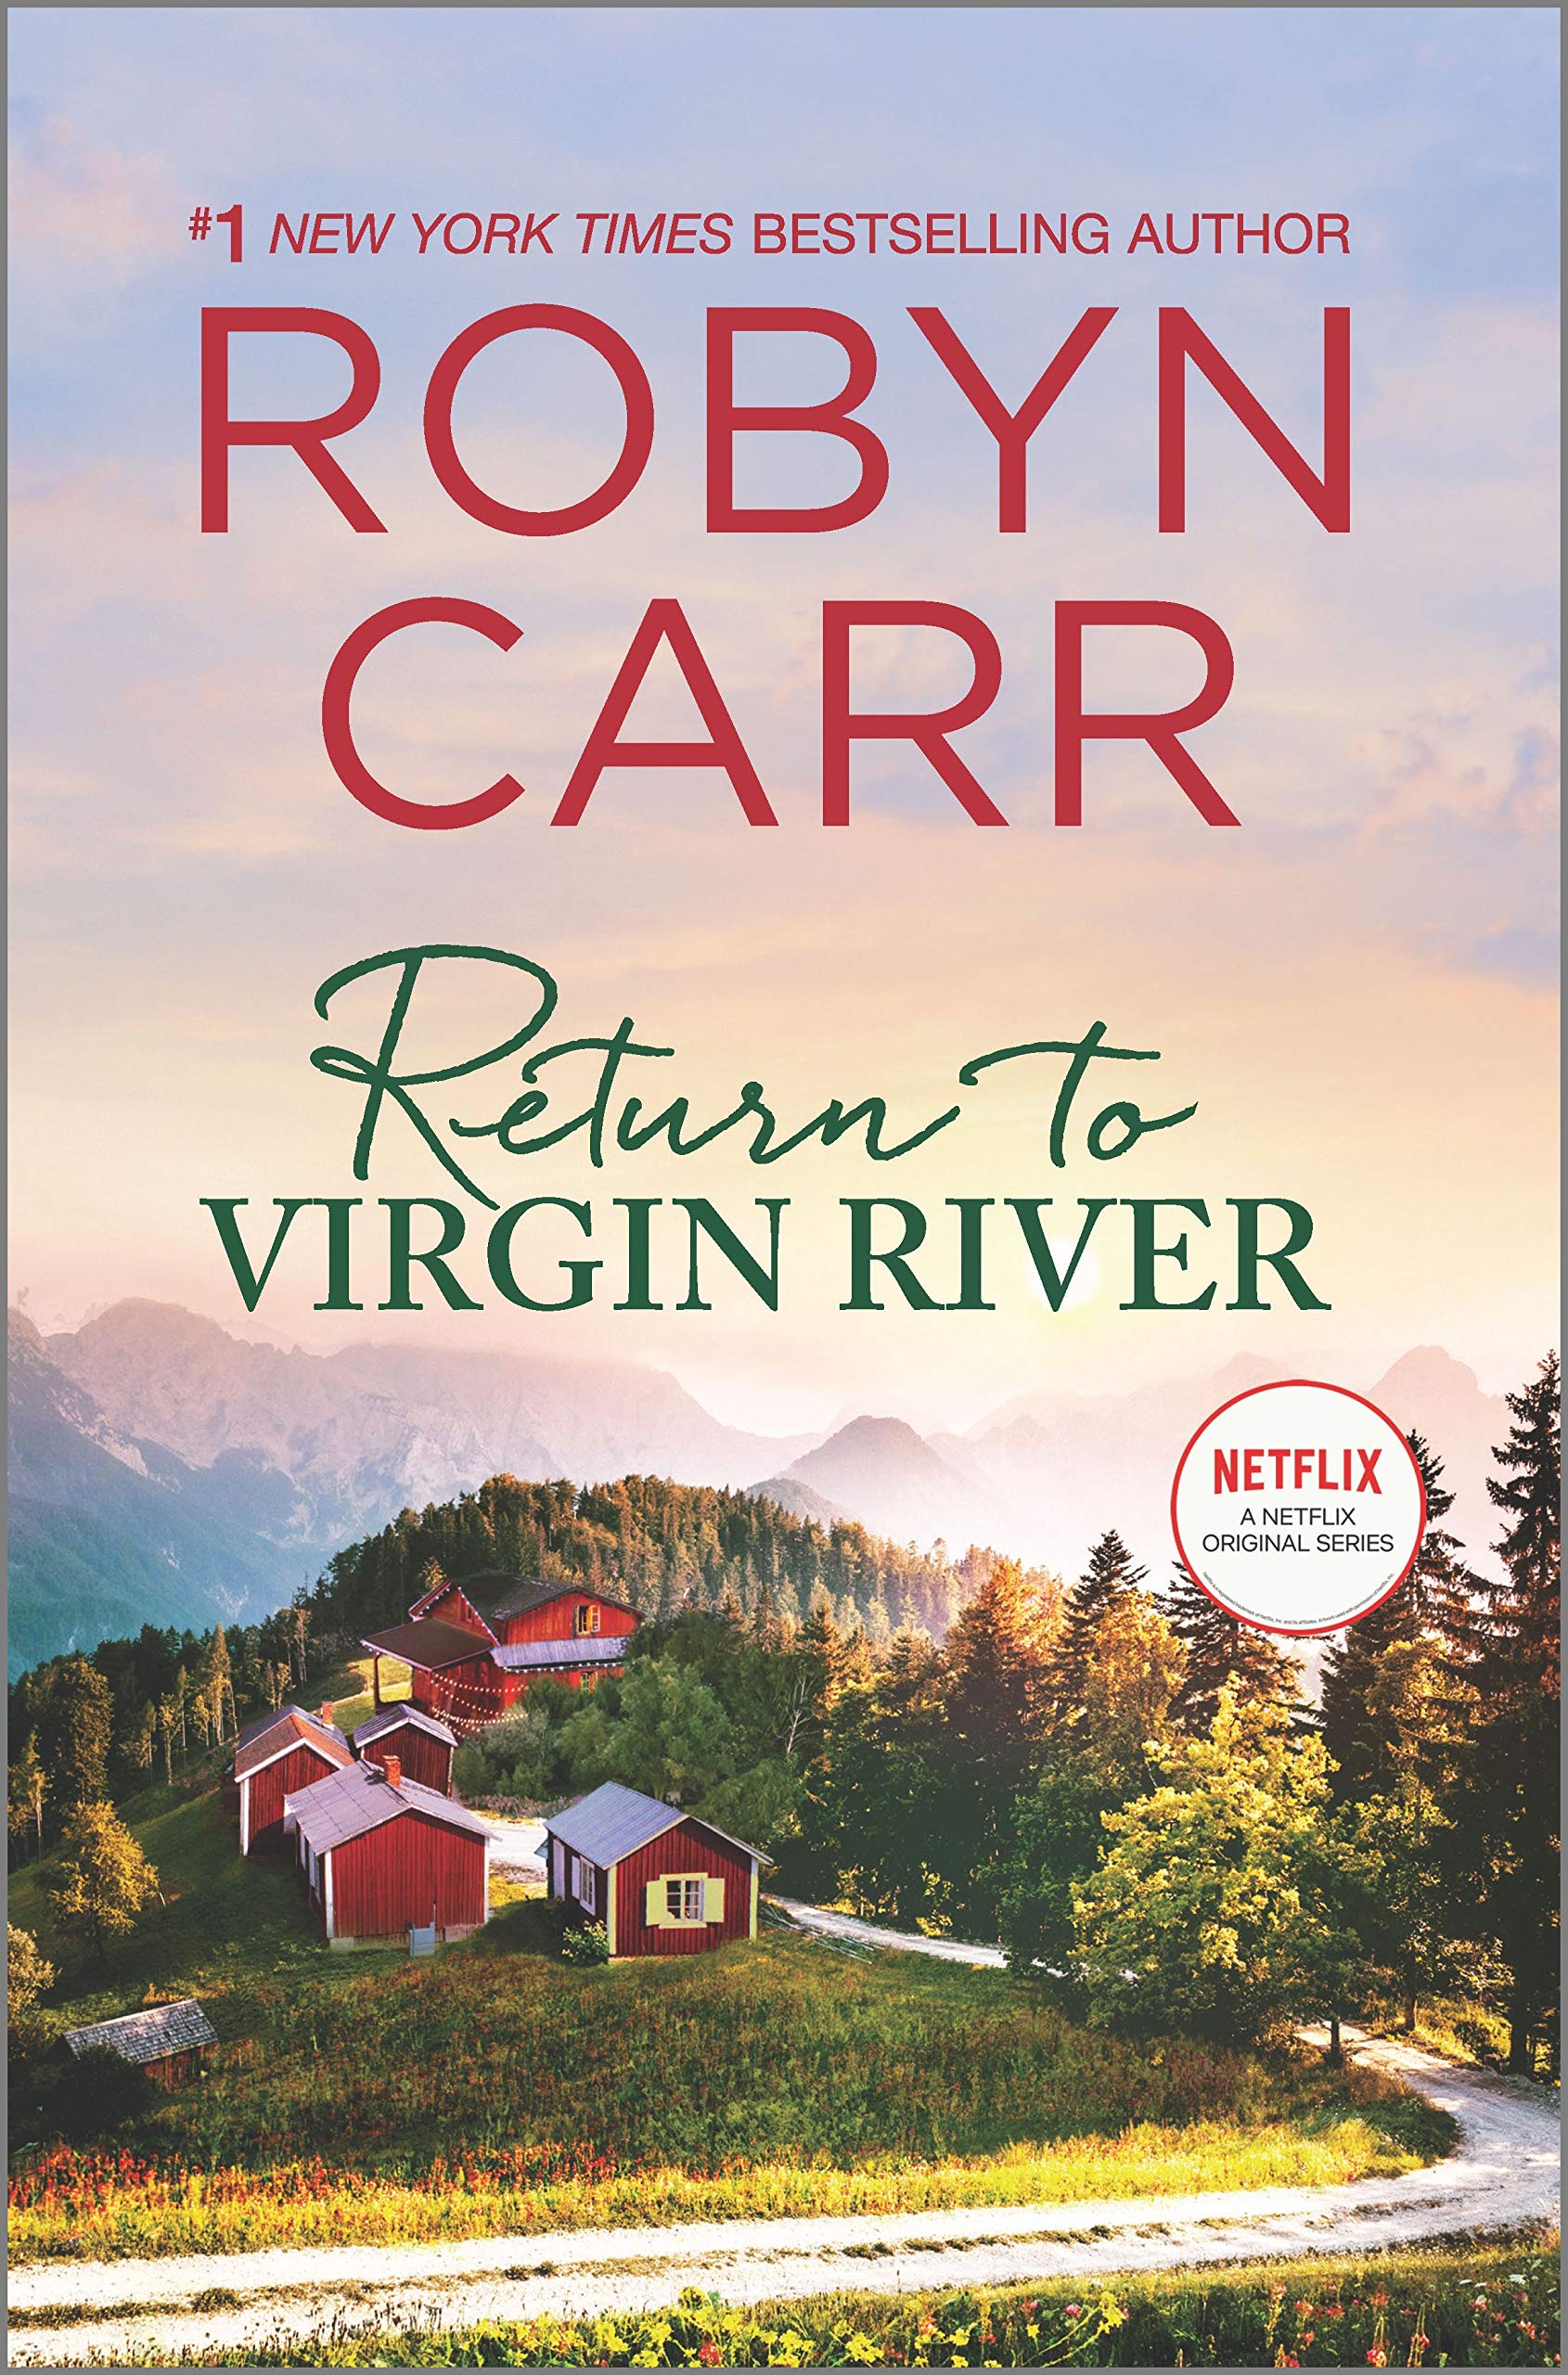 Image for "Return to Virgin River"